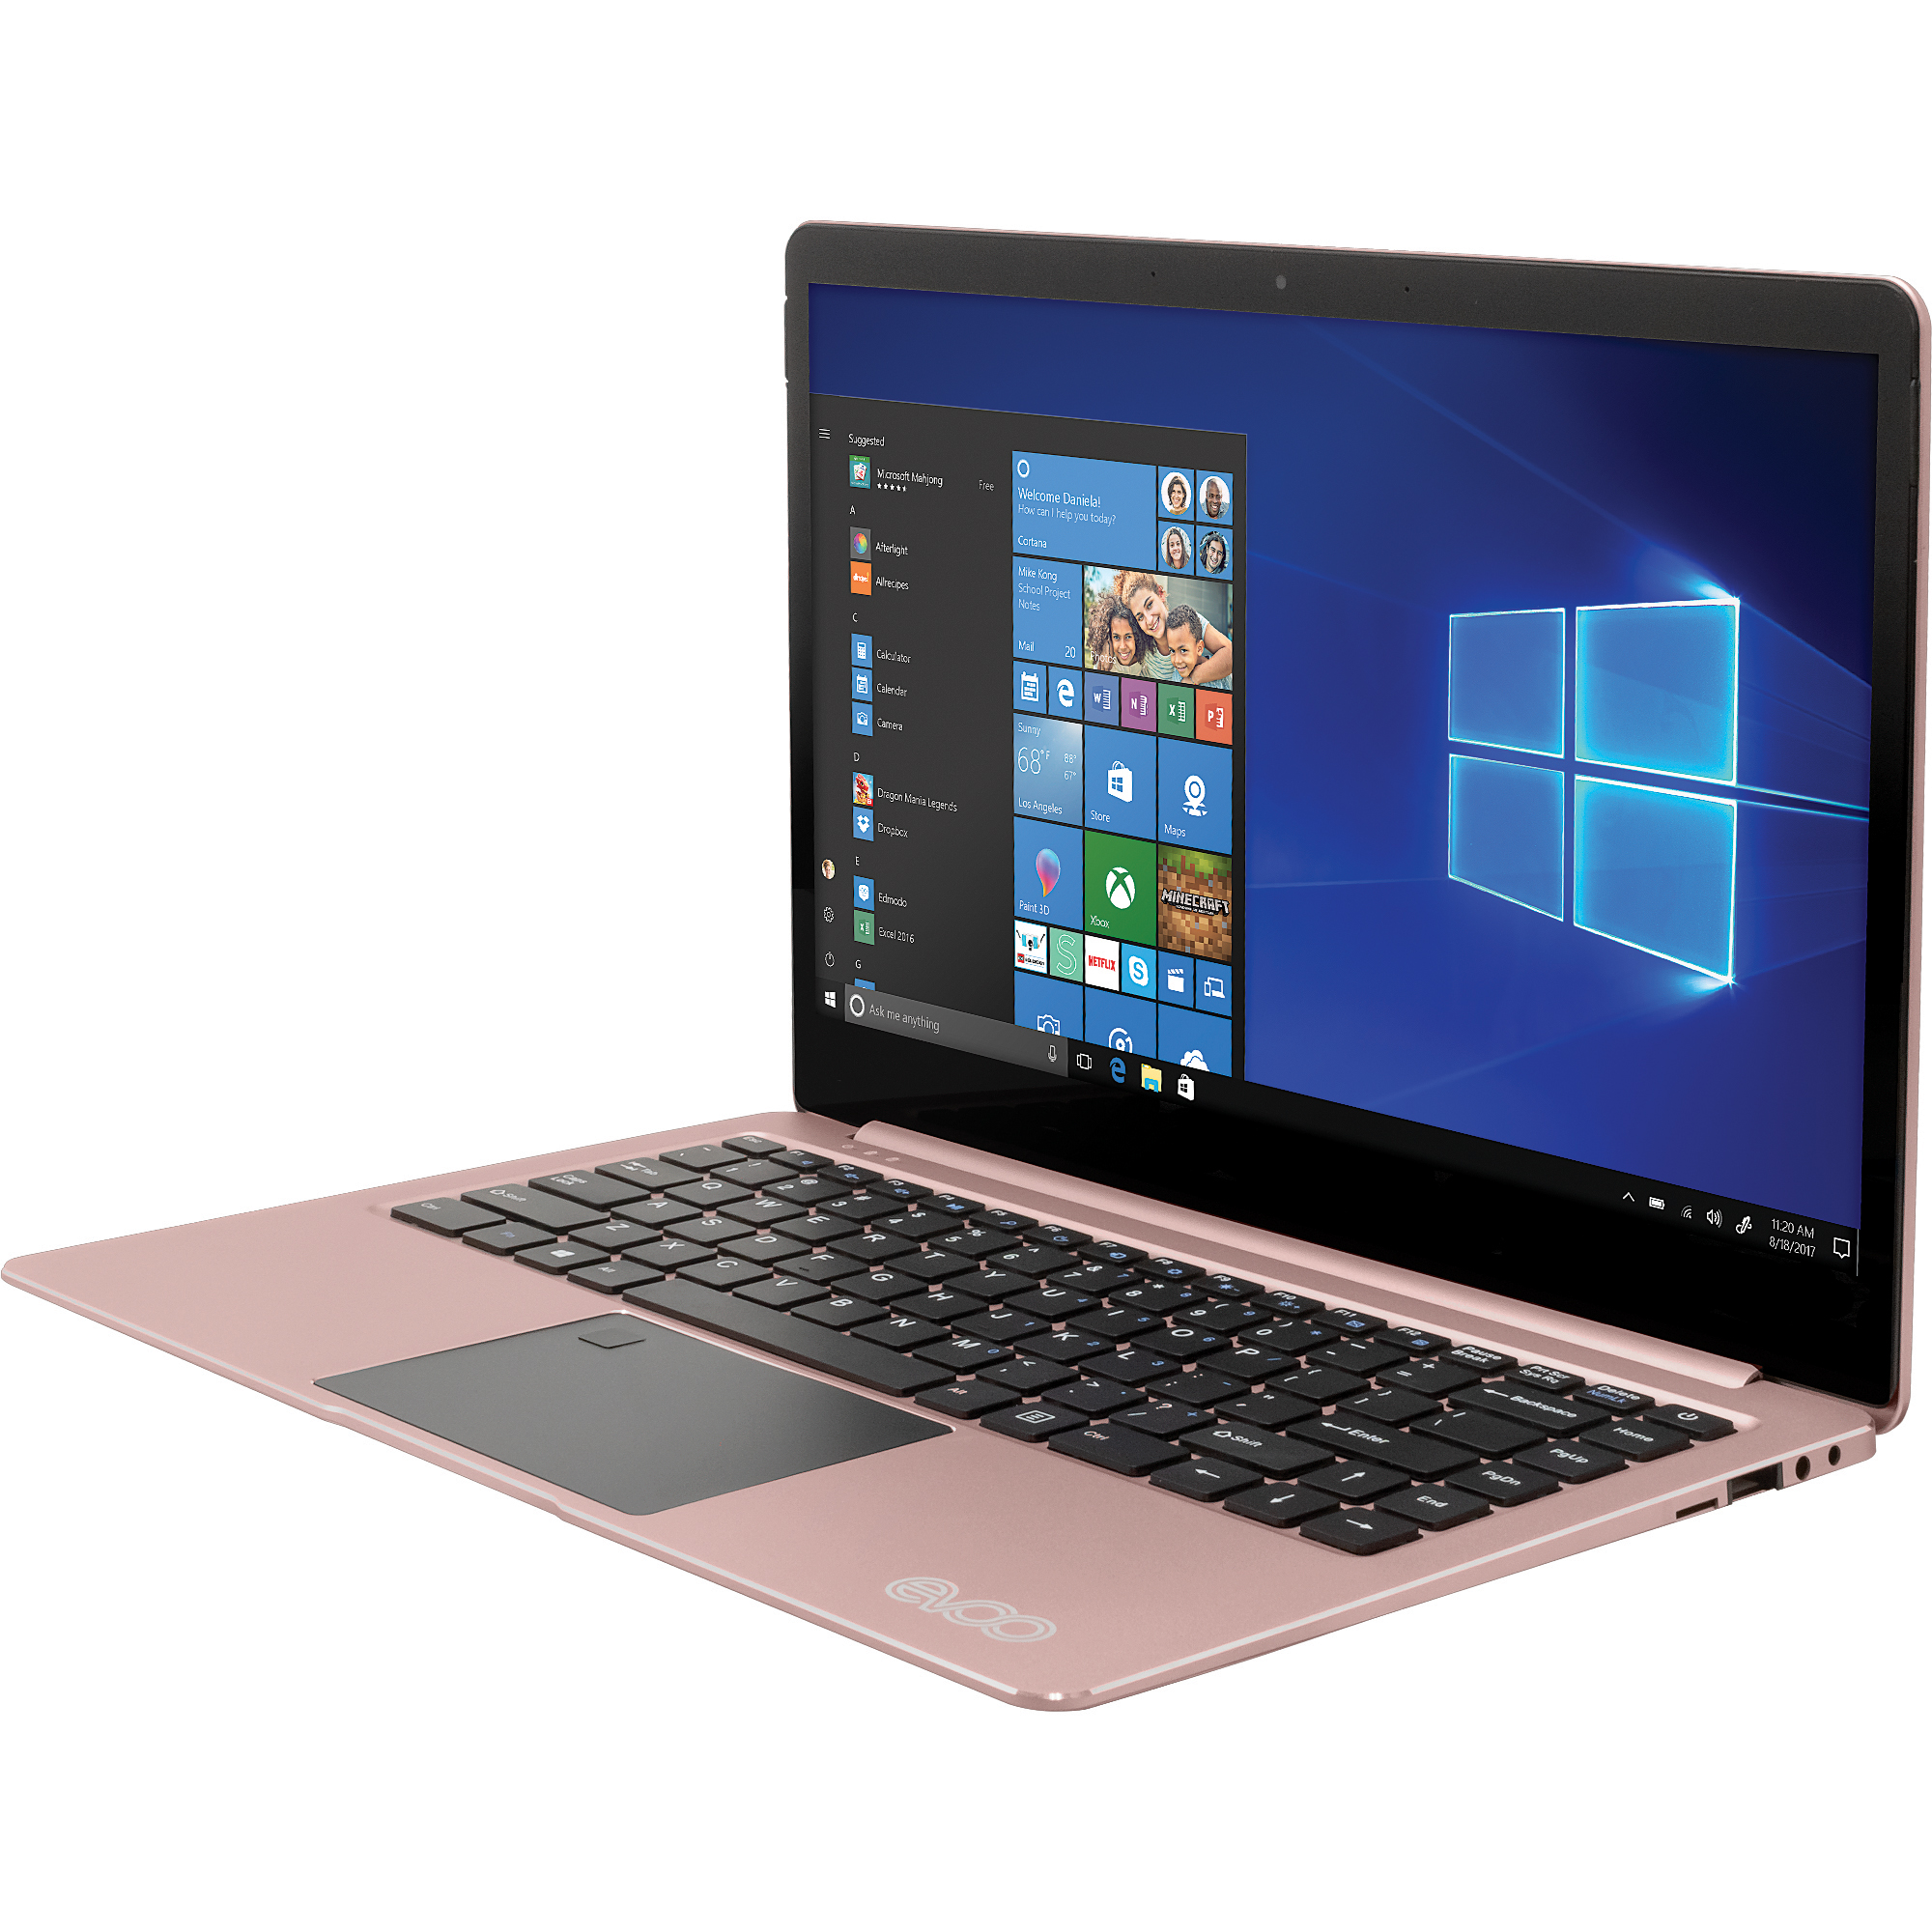 EVOO 14.1" Ultra Thin Laptop - Elite Series, Intel Celeron CPU, 4GB Memory, 32GB, Windows 10 S, Windows Hello (Fingerprint Scanner), Rose Gold - image 2 of 5